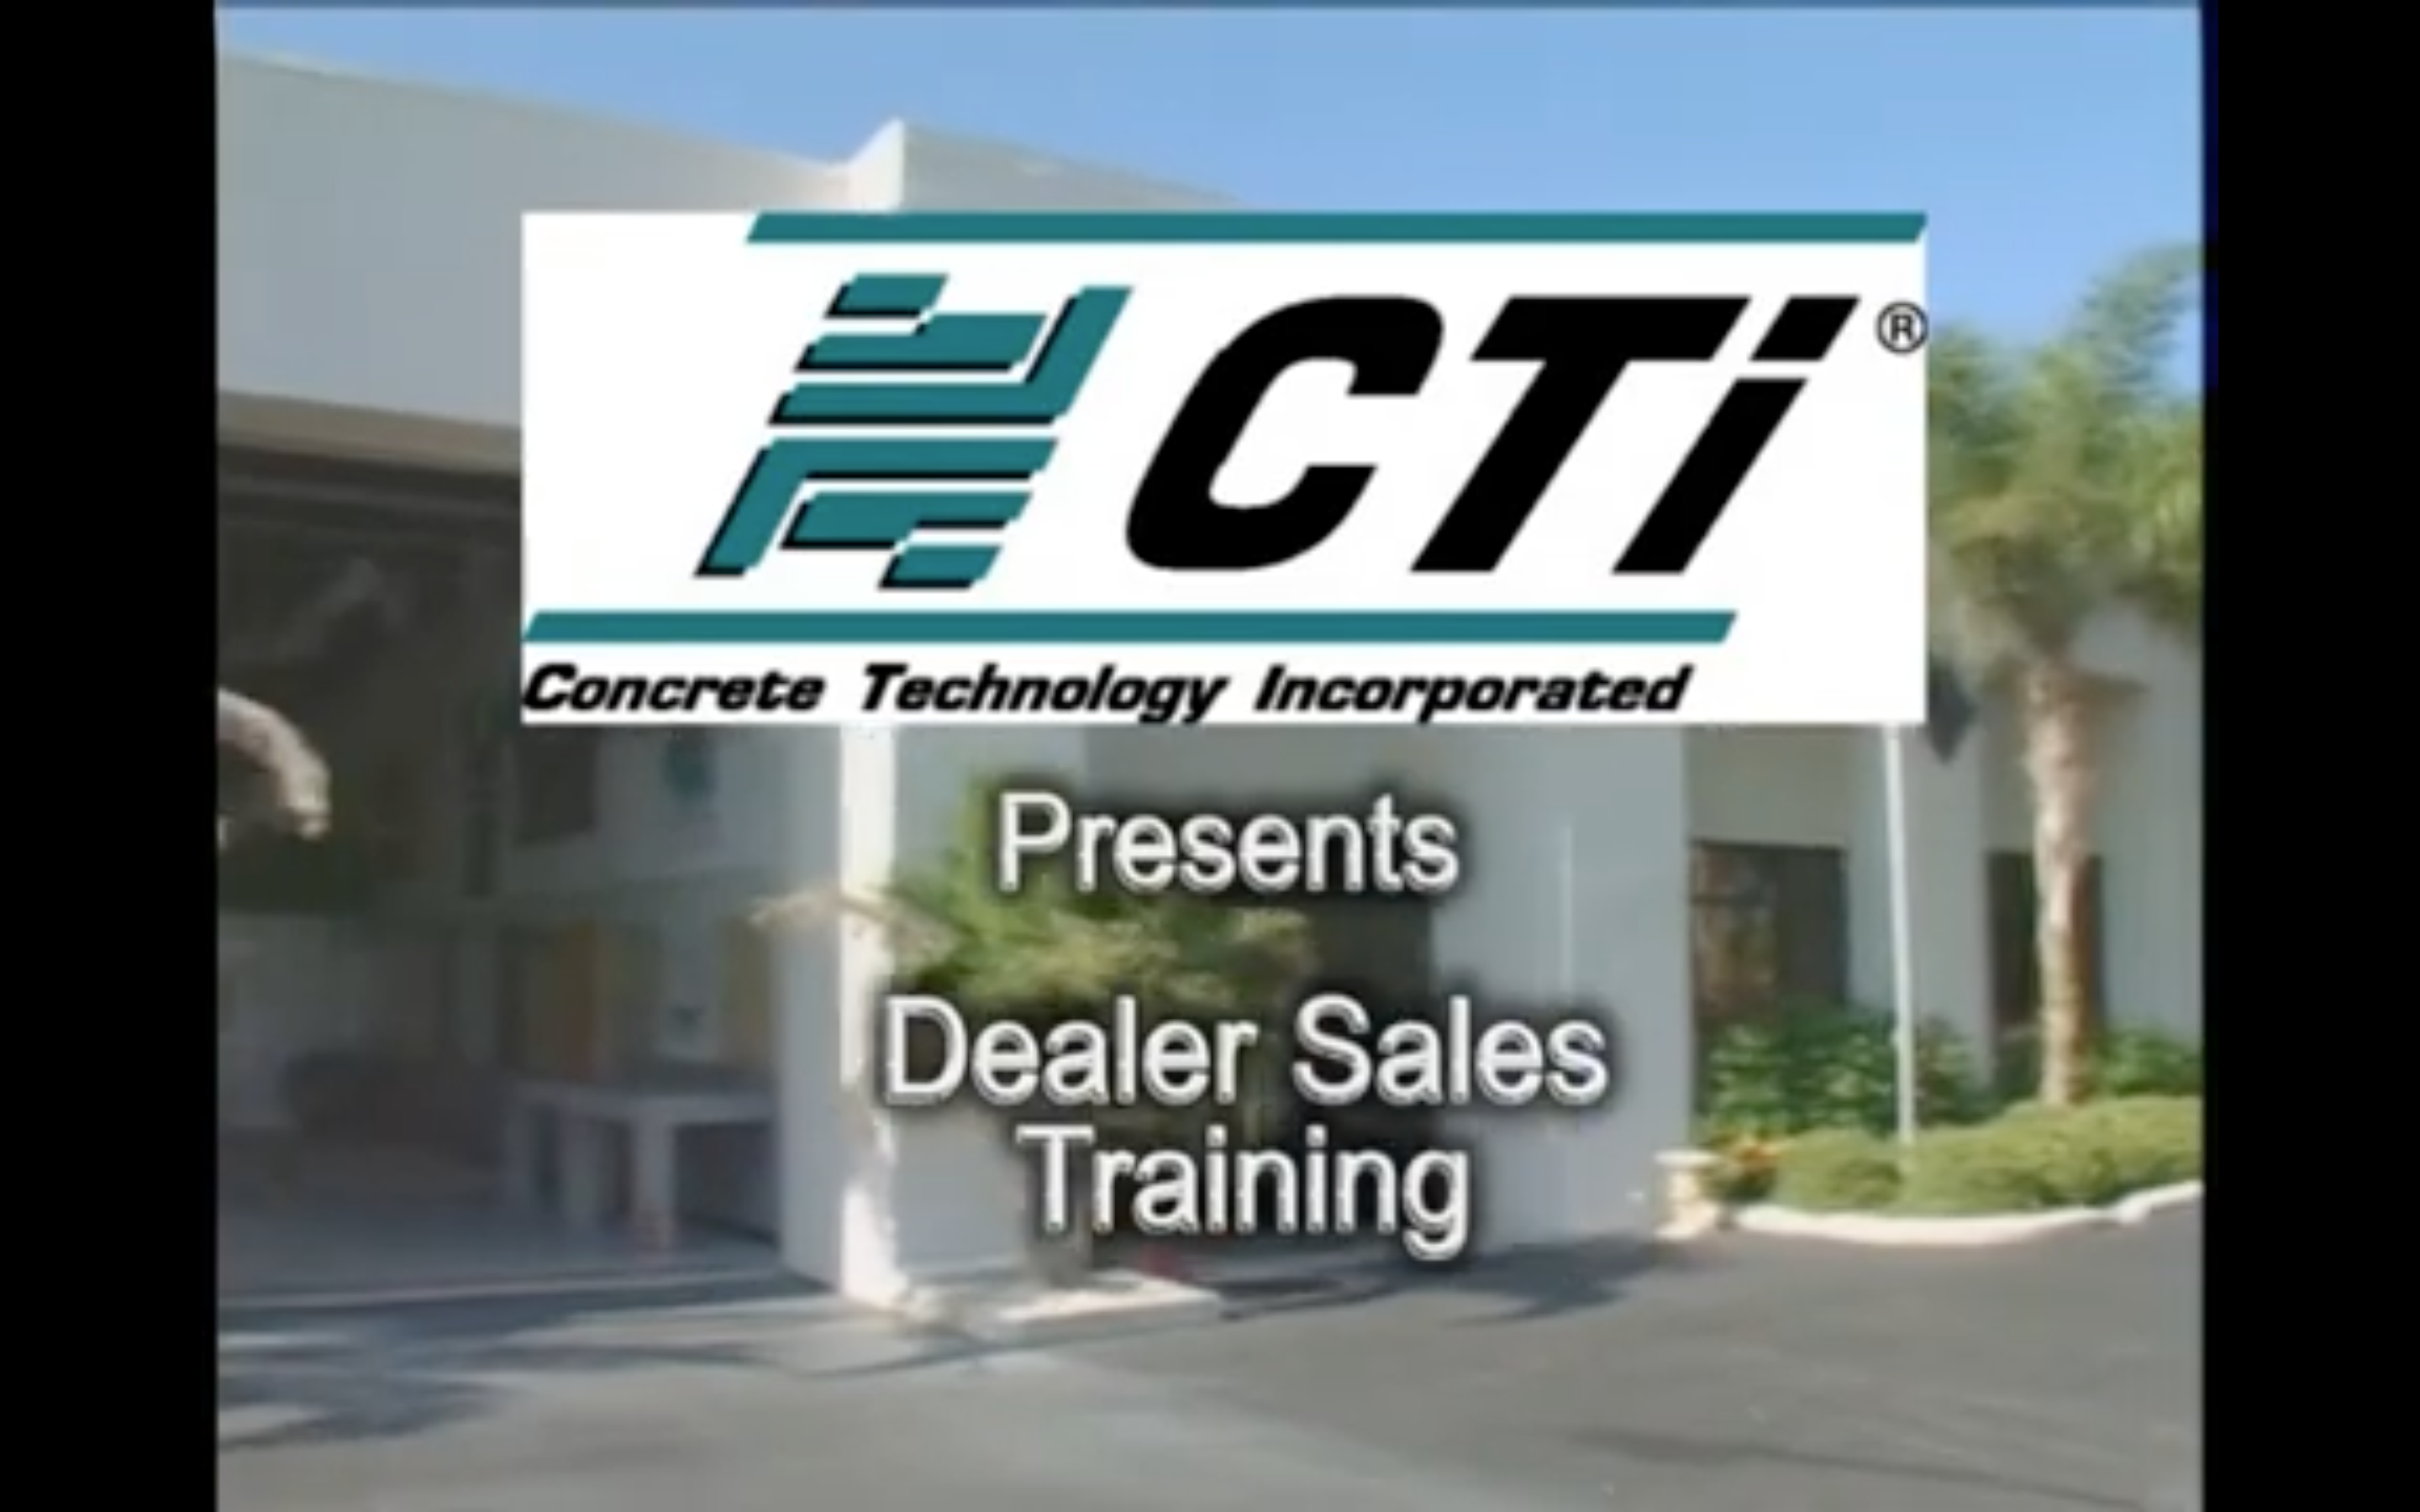 Dealer Sales Training